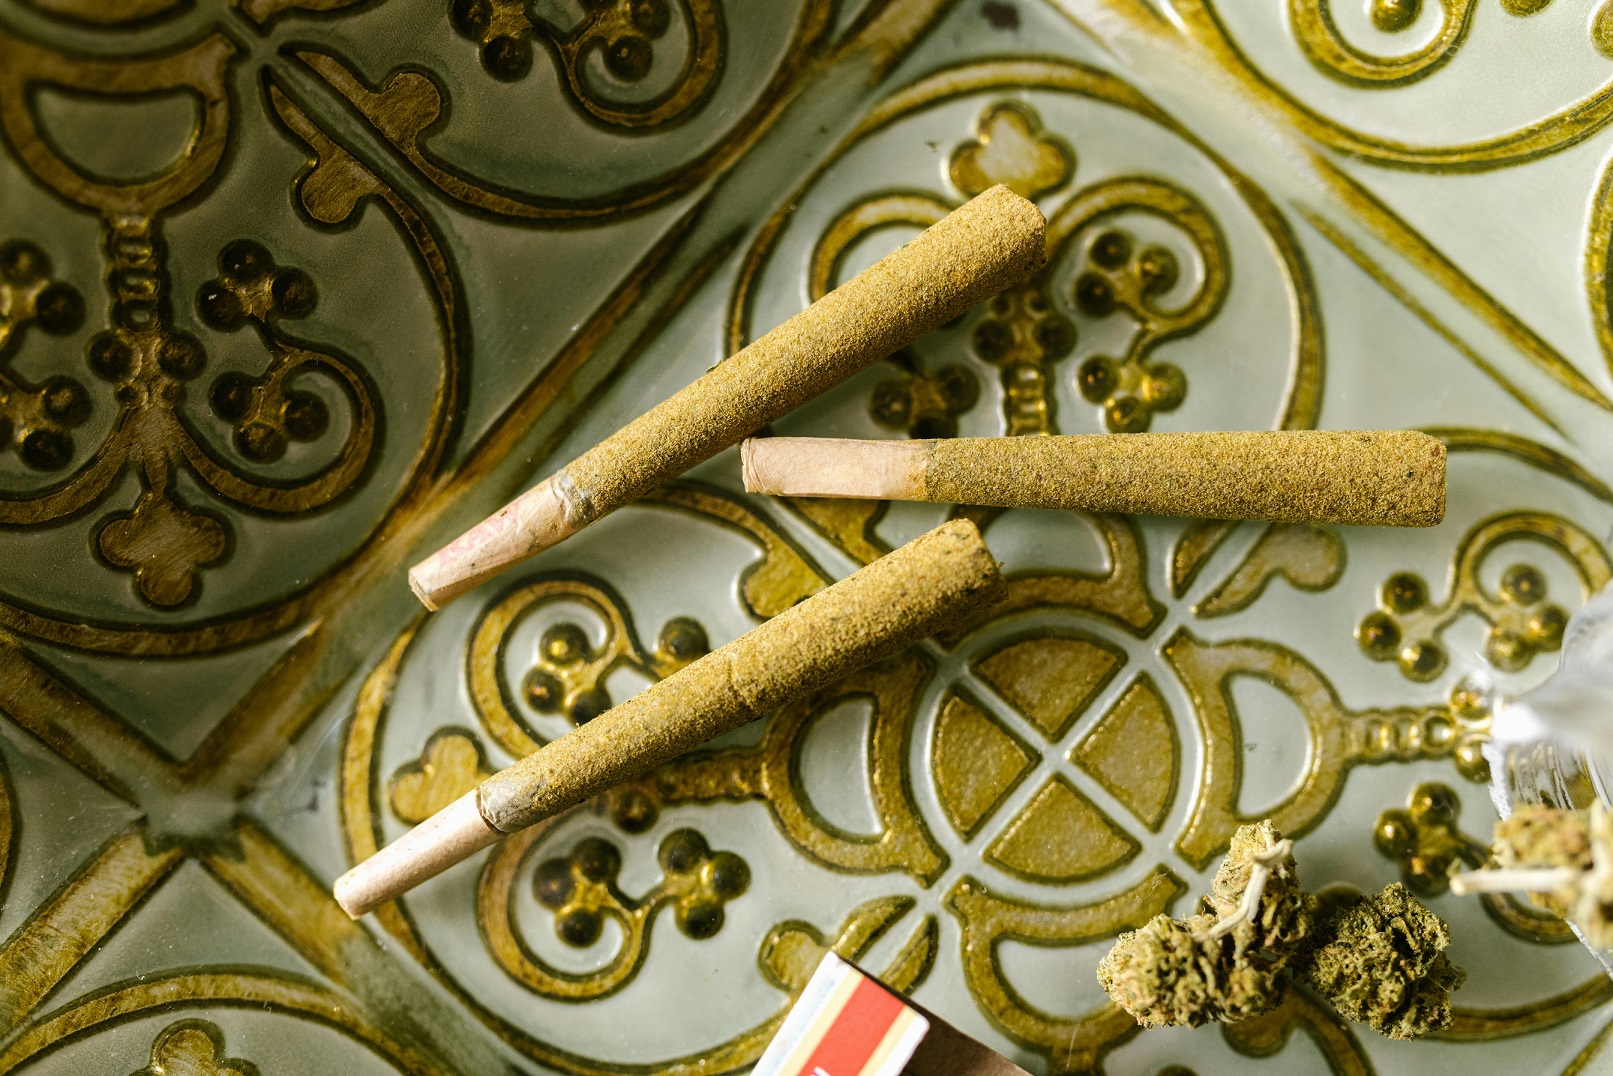 Cannabis flower & preroll